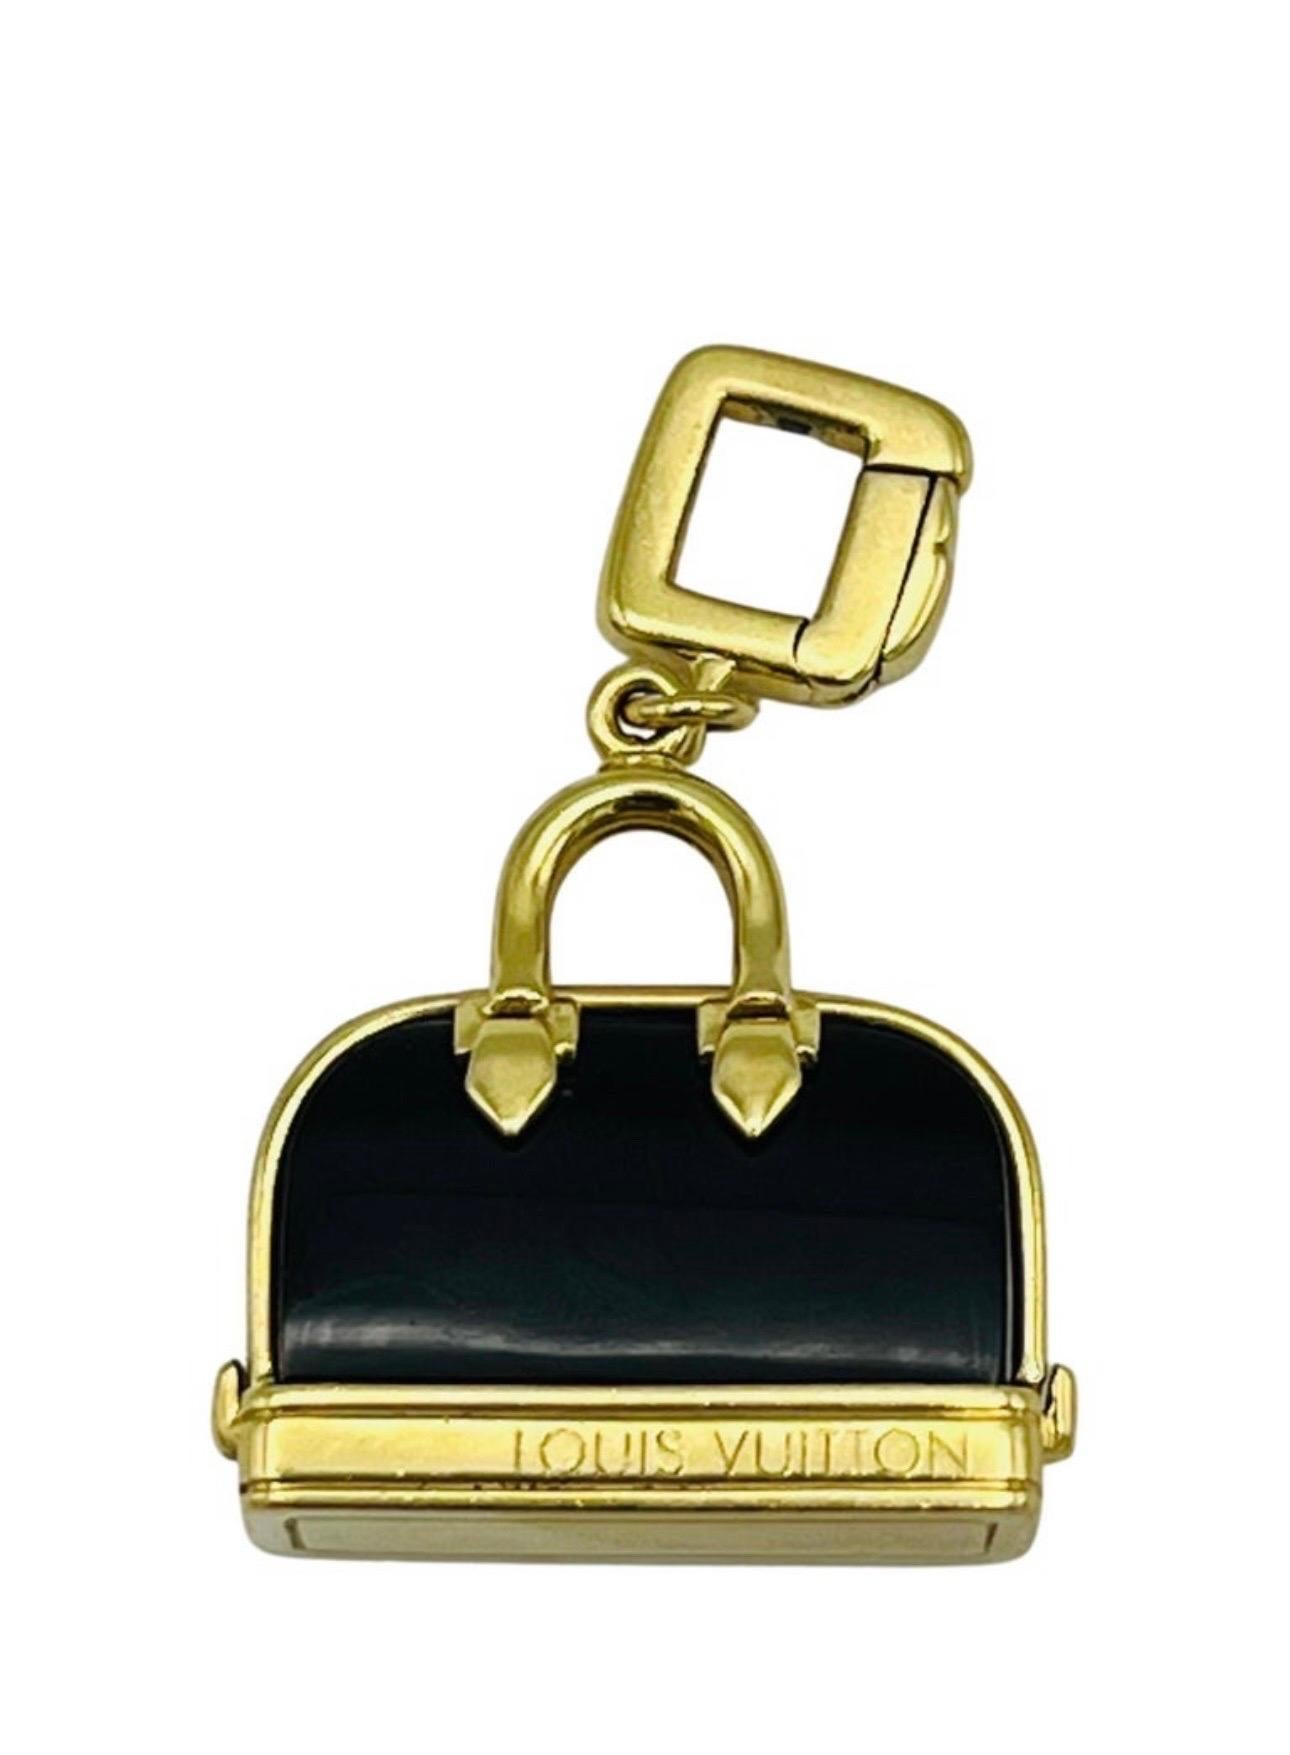 Louis Vuitton Padlock & Keys+ Two Bags Charm Bracelet en or jaune 125.7 Gm 18 KG en vente 6